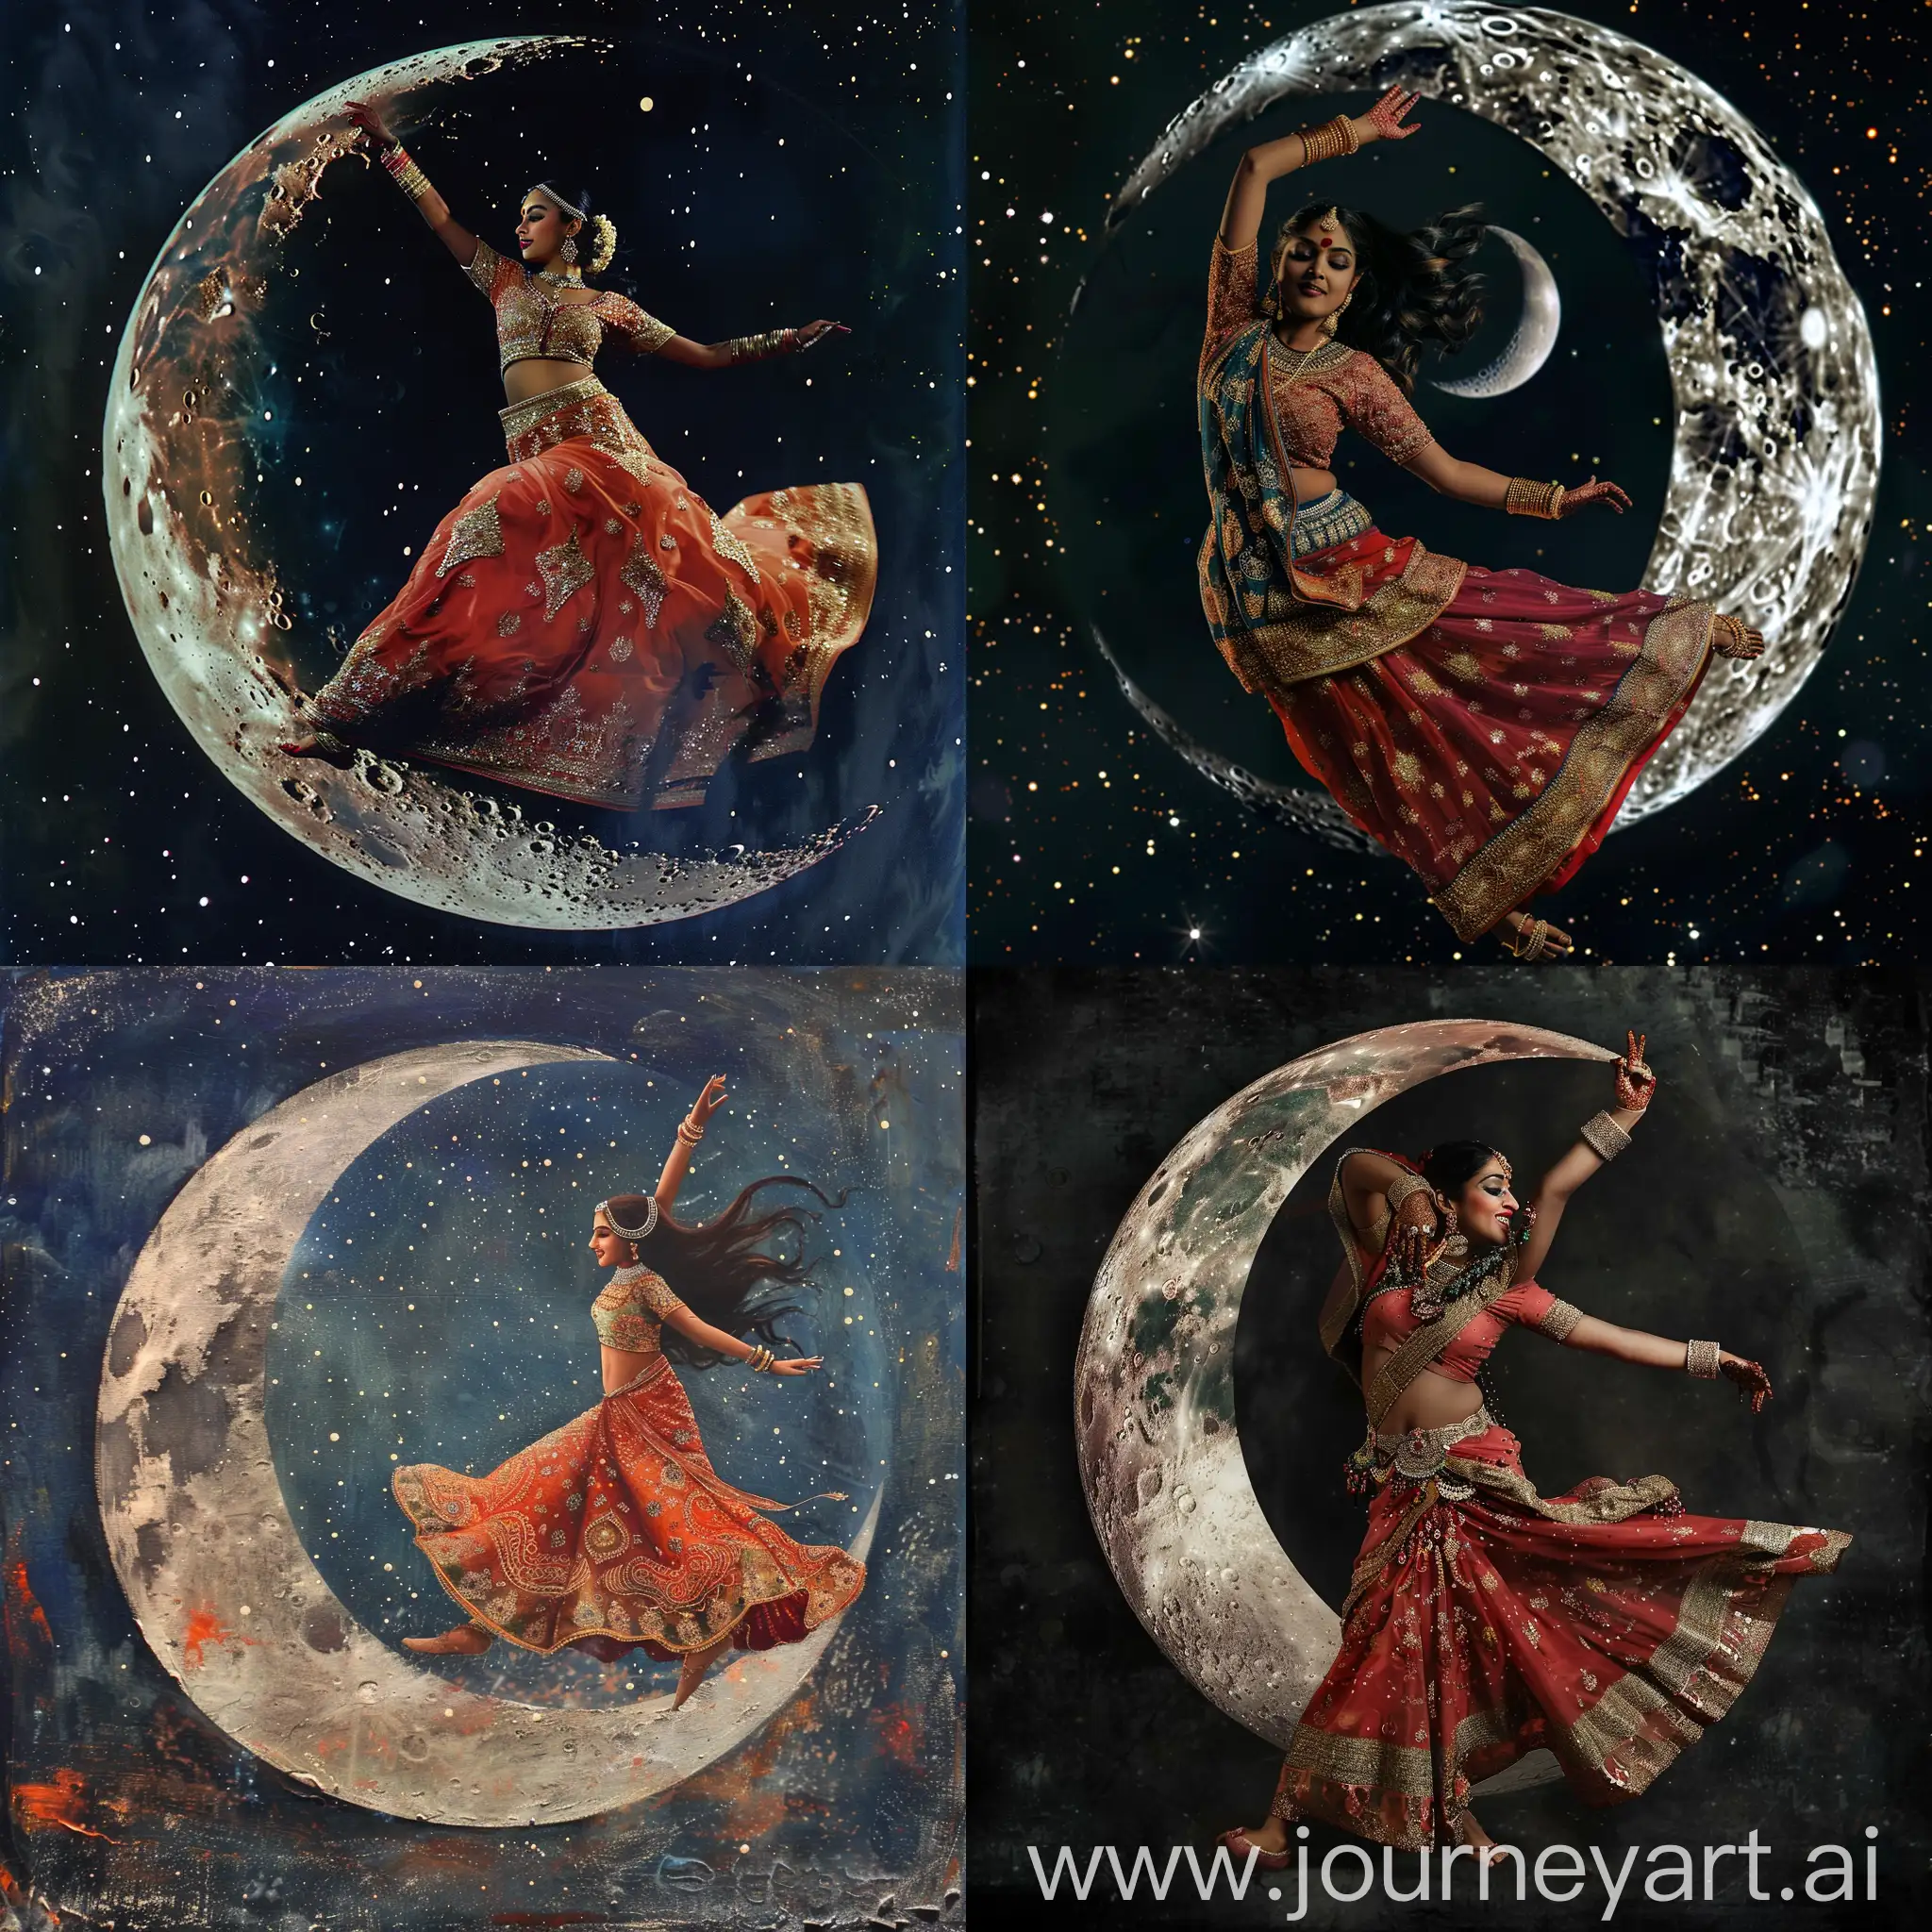 Moonlit-Rhythms-An-Indian-Dance-Performance-on-the-Lunar-Surface